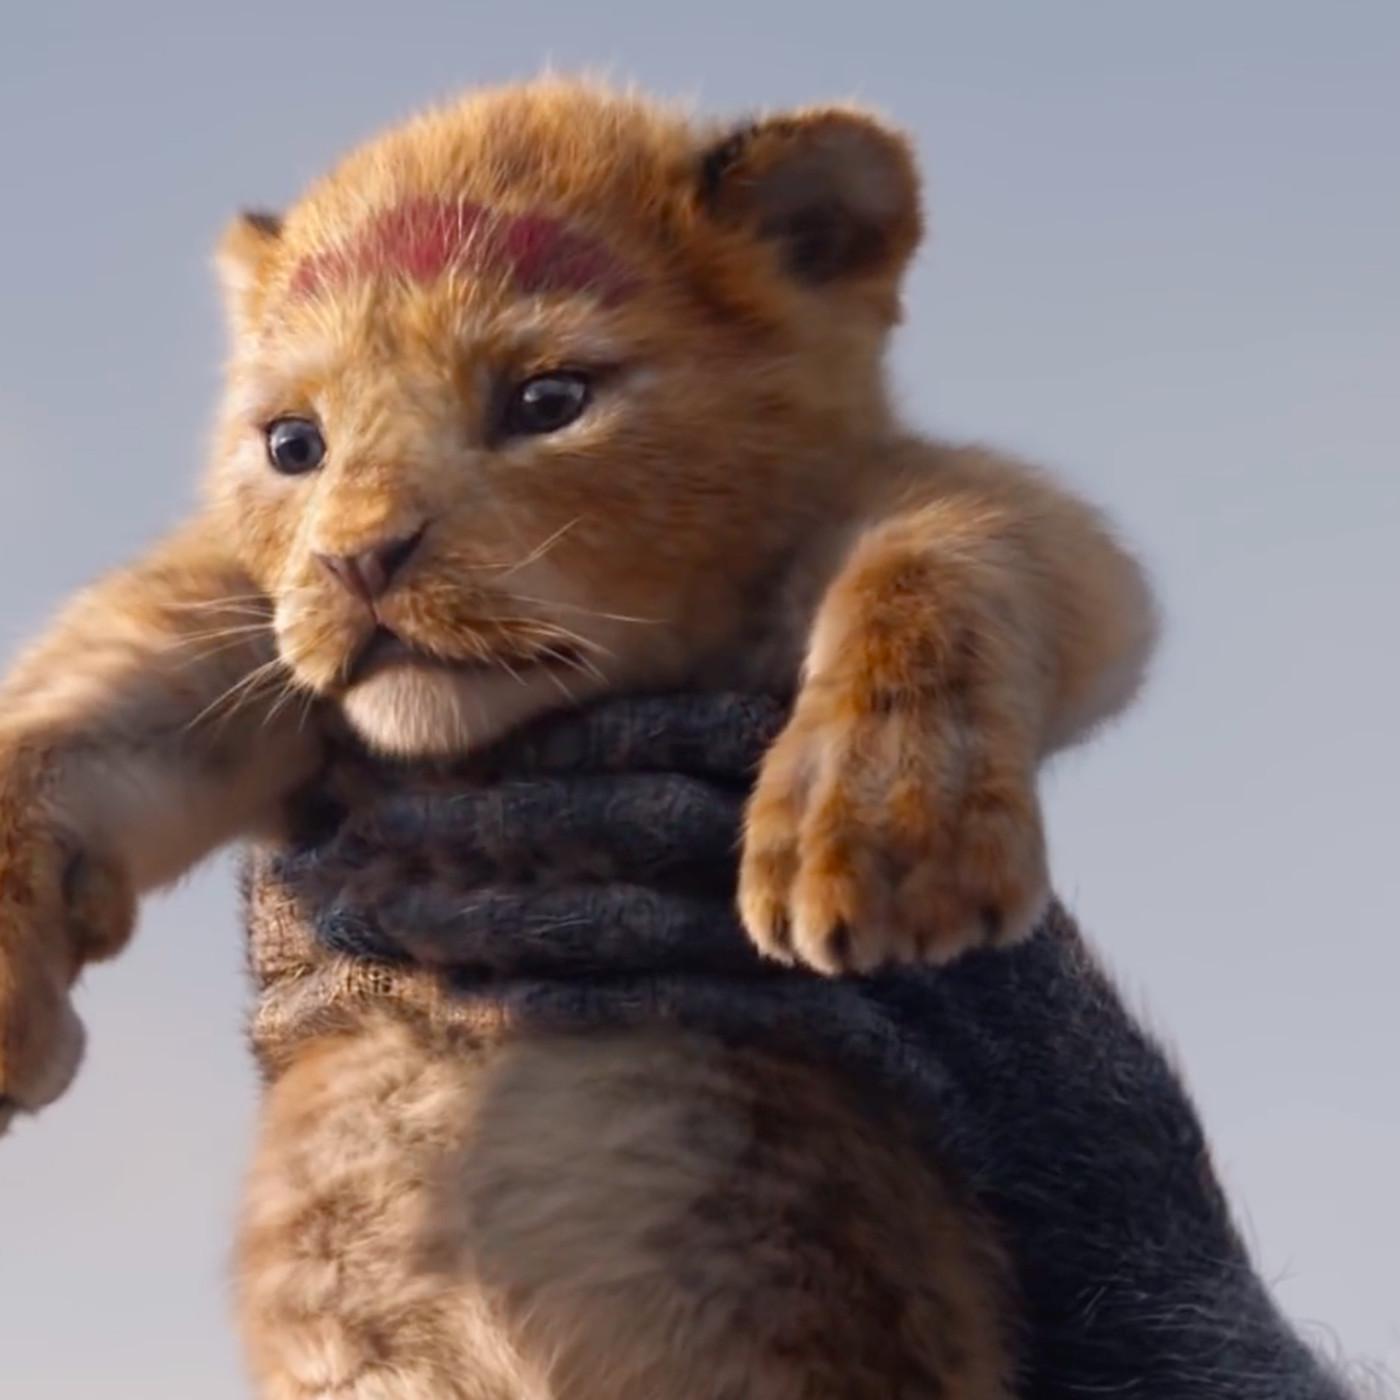 First Lion King remake trailer replicates Circle of Life opening